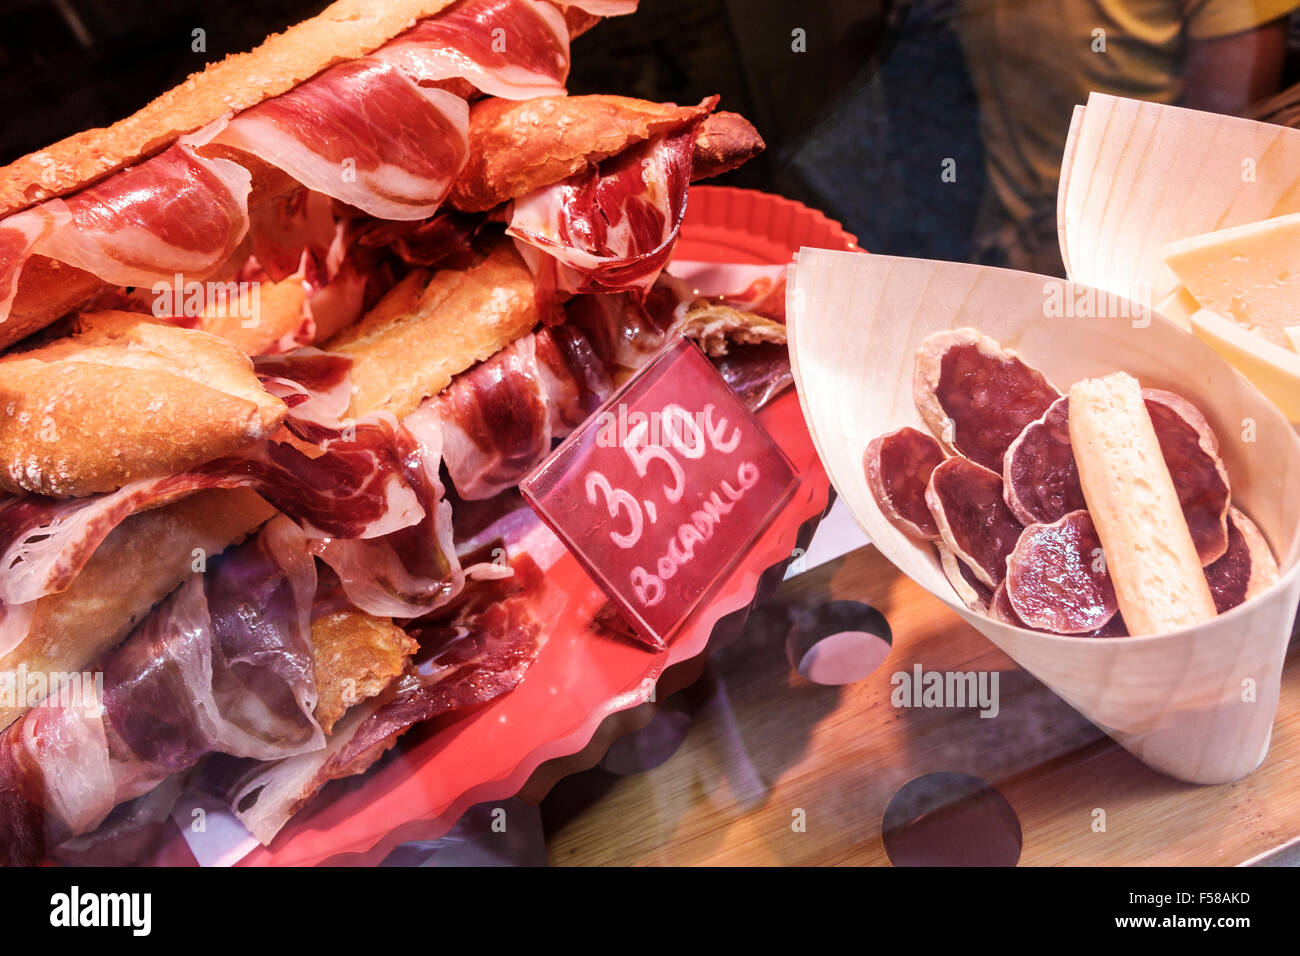 Toledo Spain,Europe,Spanish,Hispanic restaurant restaurants food dining cafe cafes,display sale tapas,Iberian ham,Iberico,cured ham,sausage,cones,sand Stock Photo